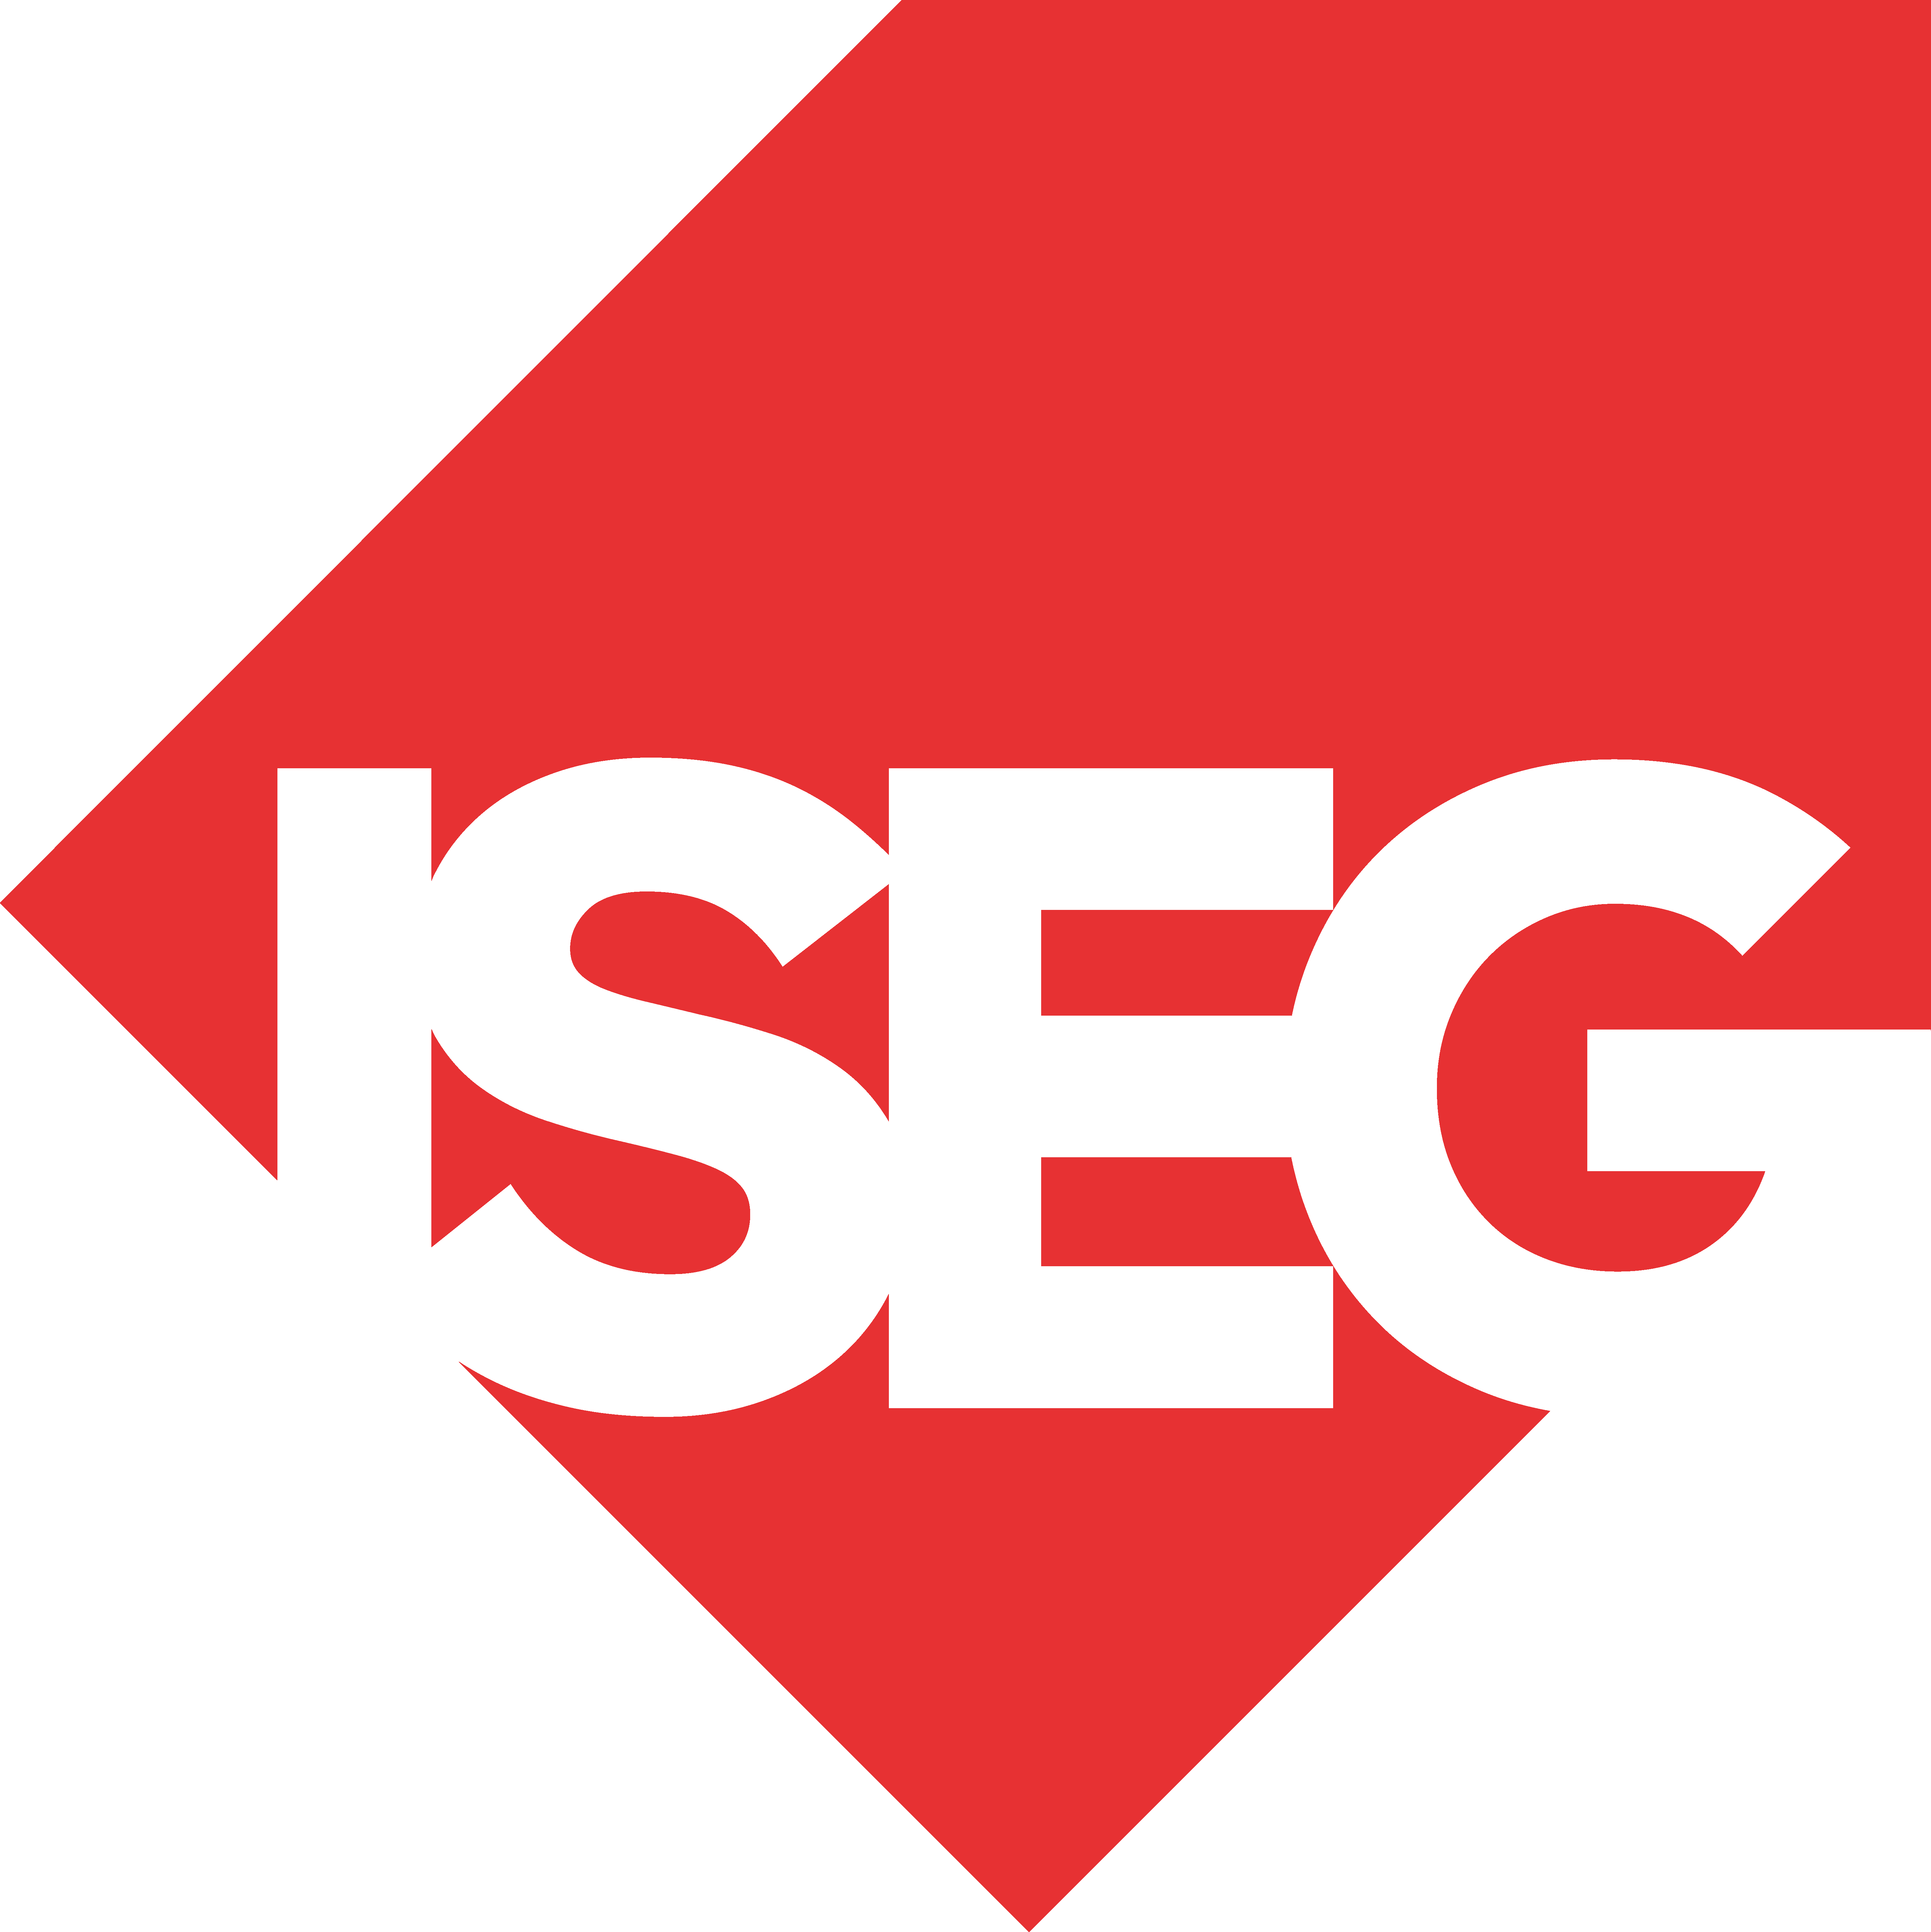 logo ISEG